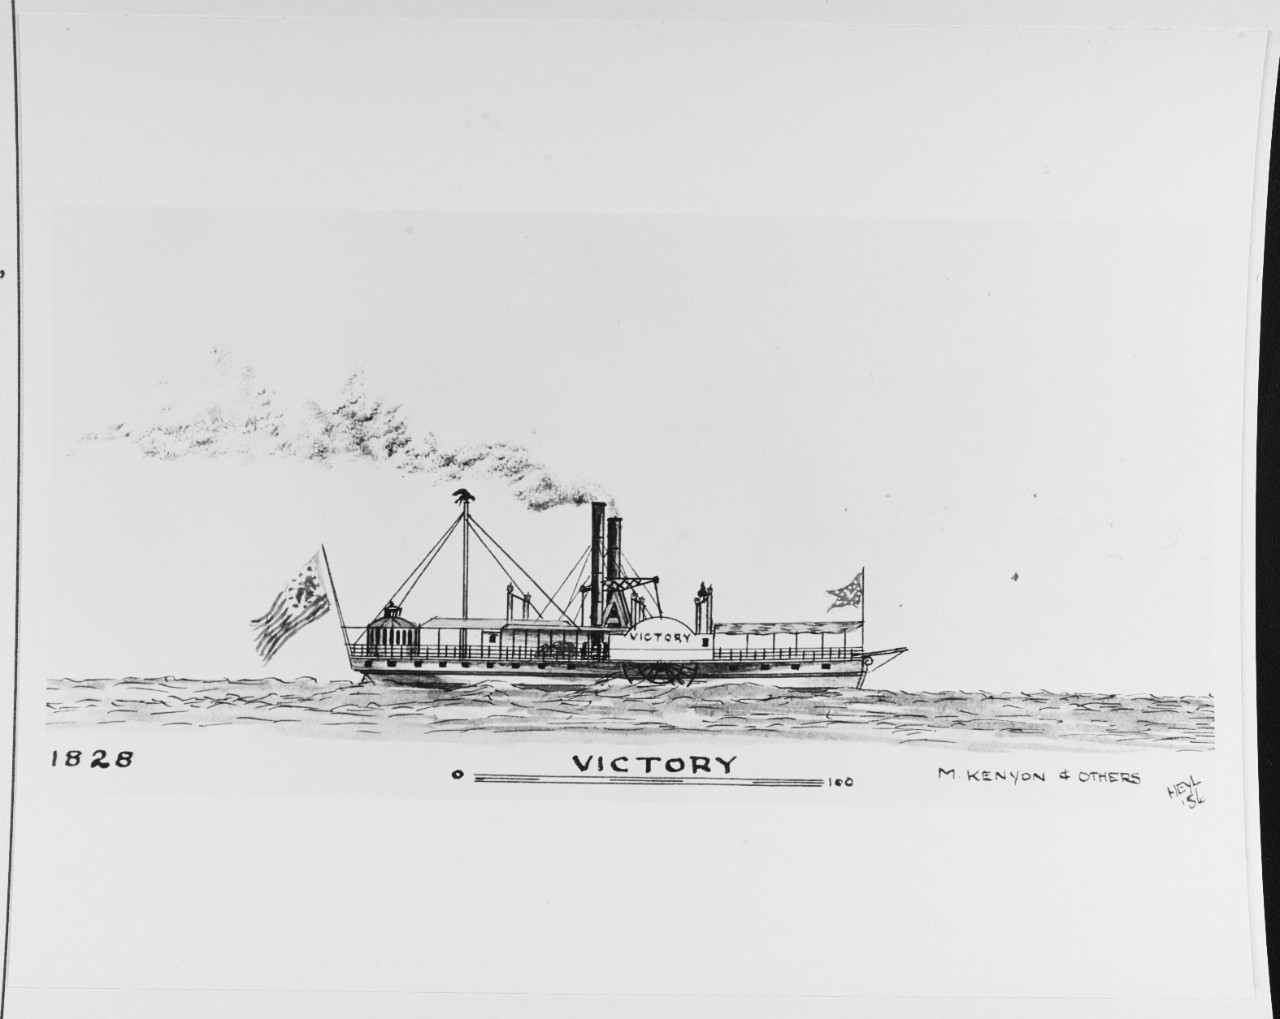 VICTORY (American Merchant Steamer, 1827-45)